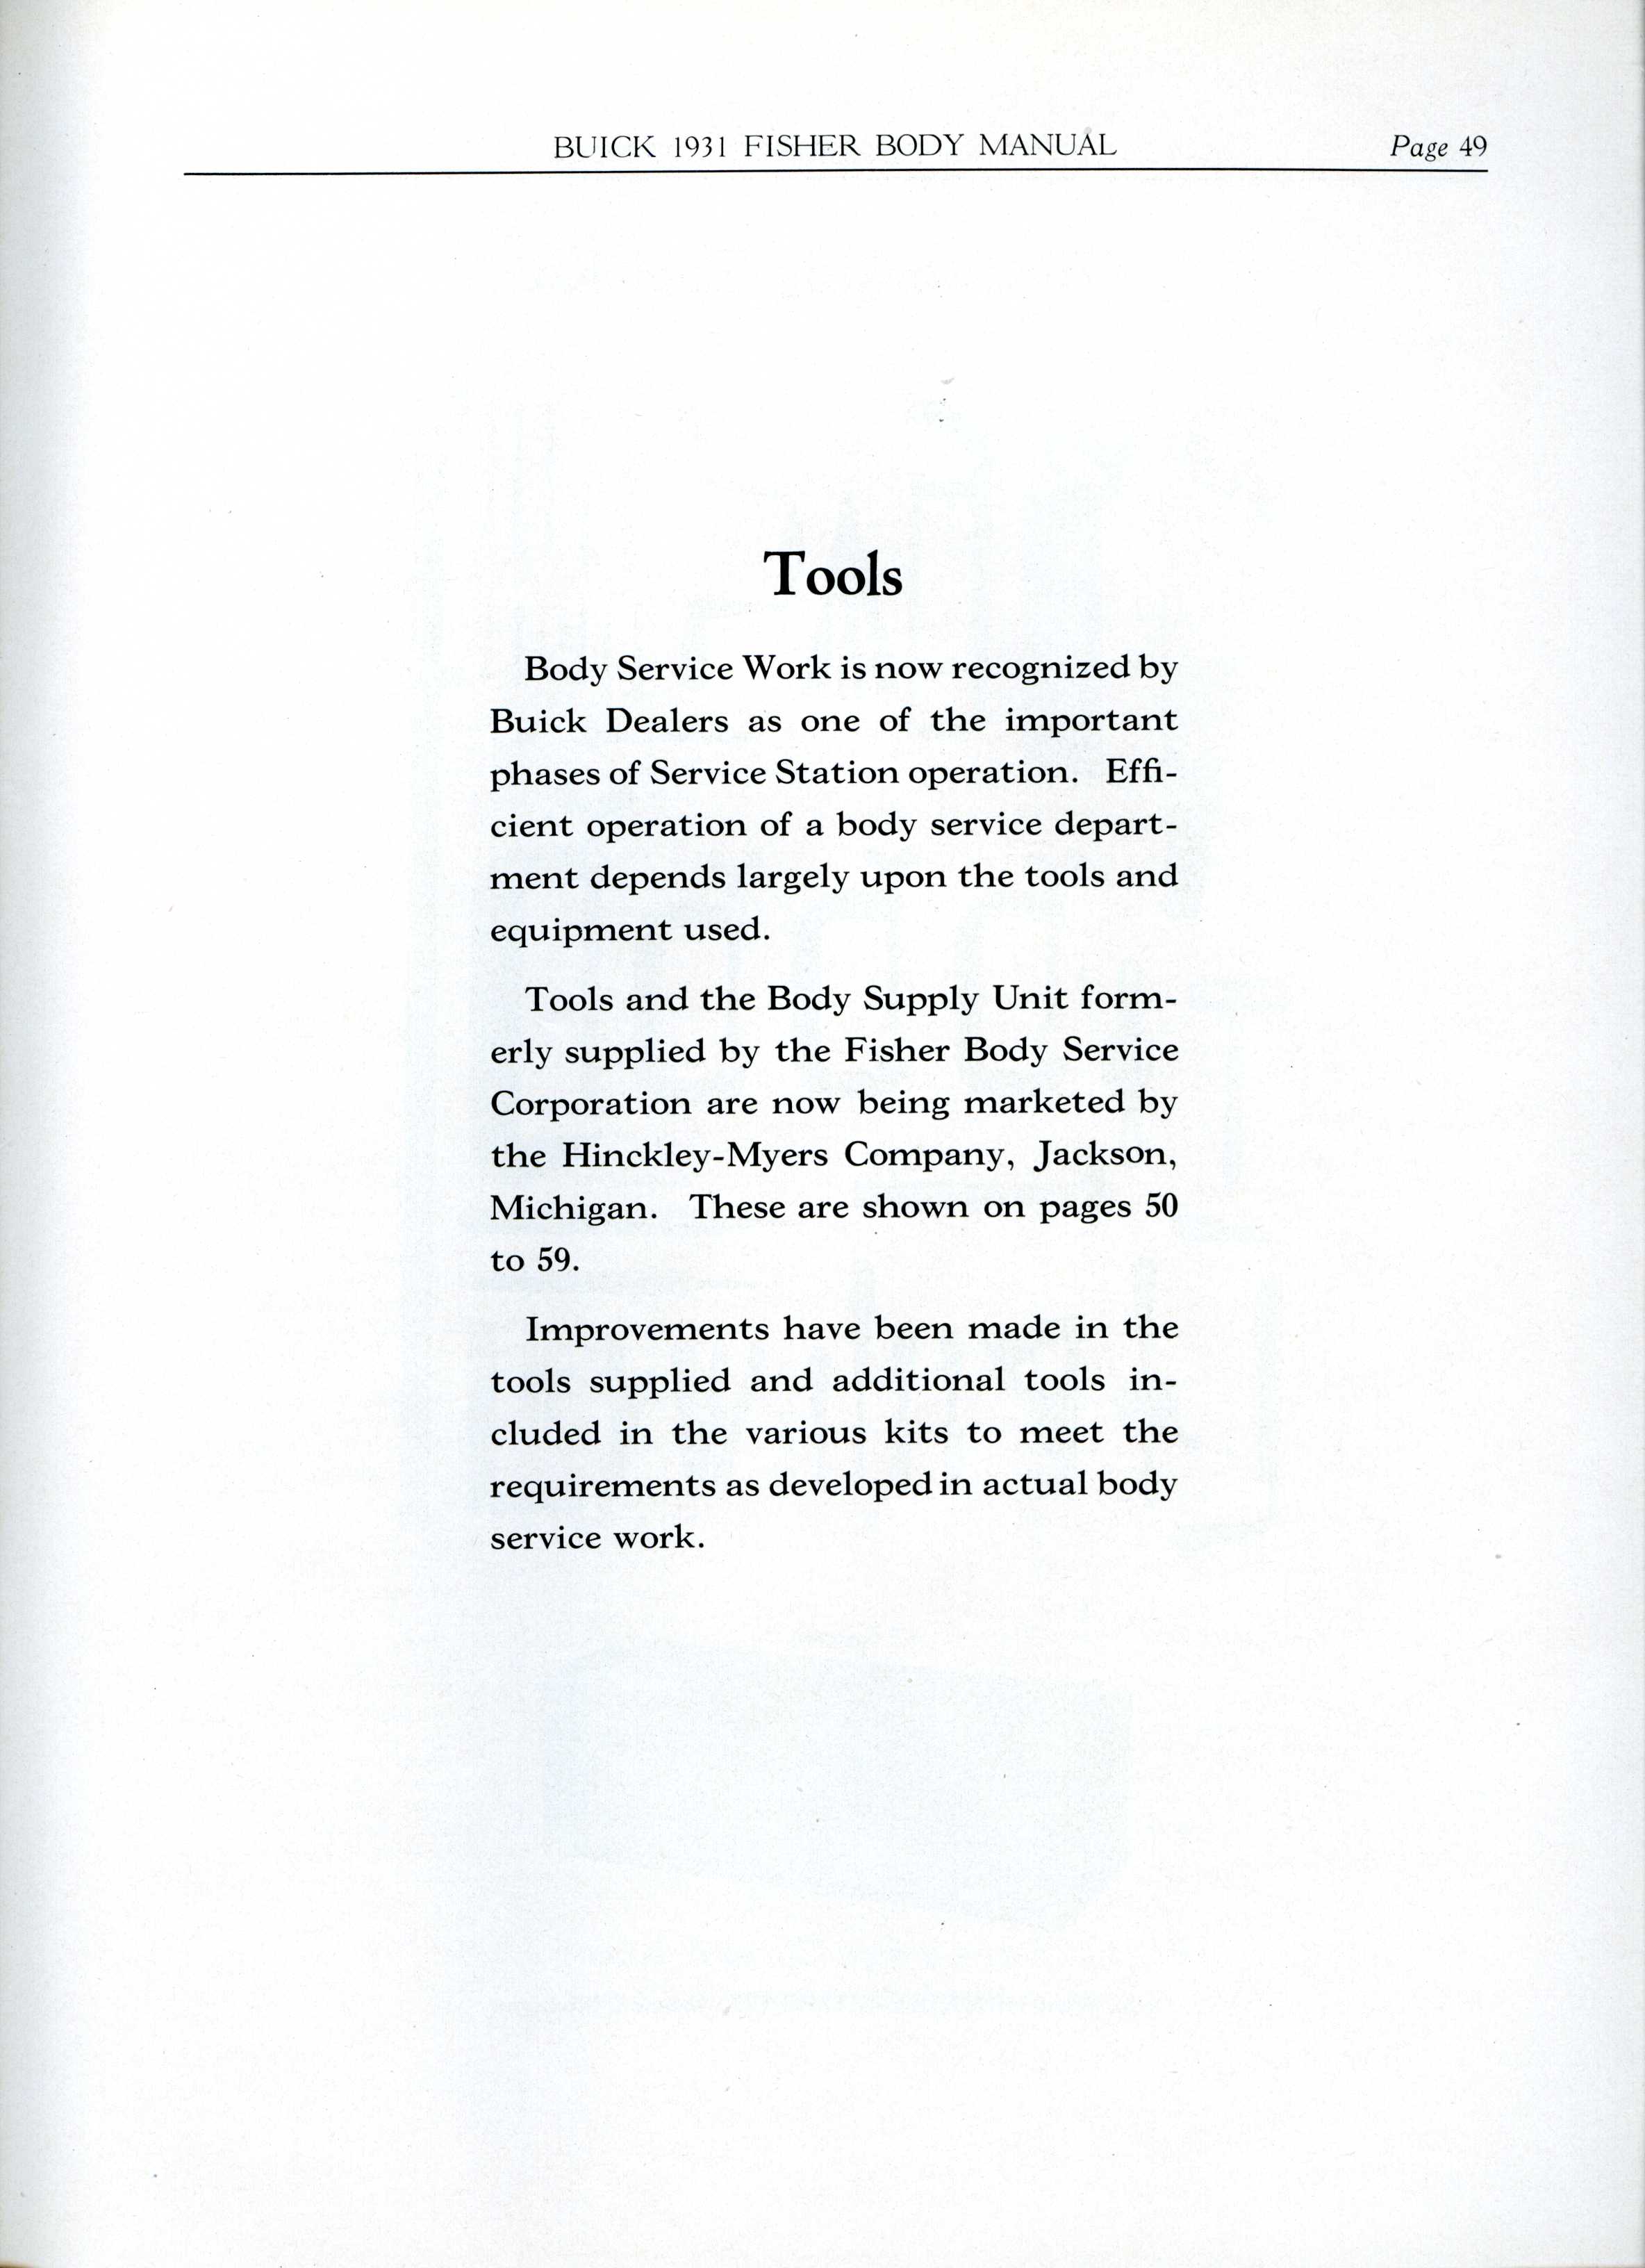 1931 Buick Fisher Body Manual-49